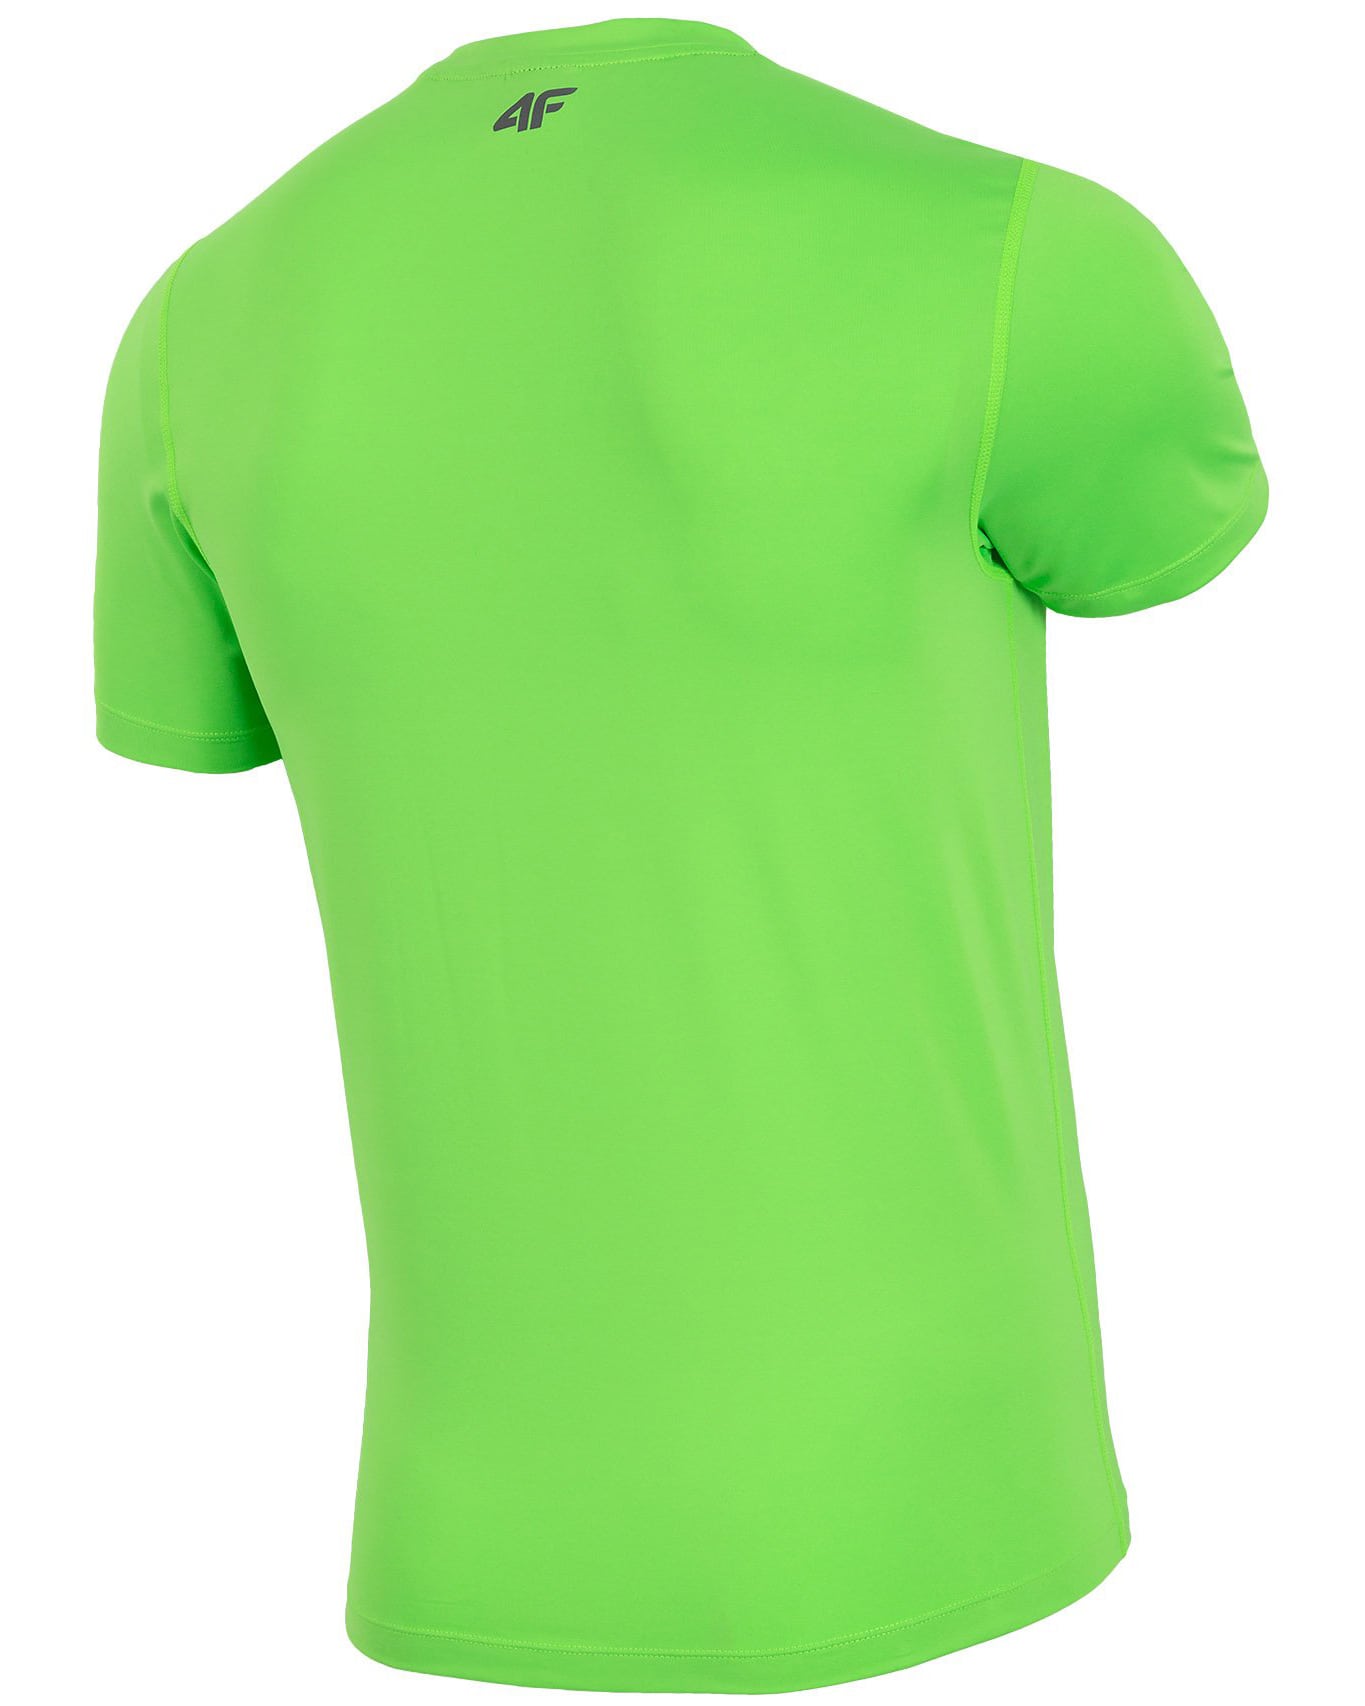 4F Man’s T-shirt - Green Neon